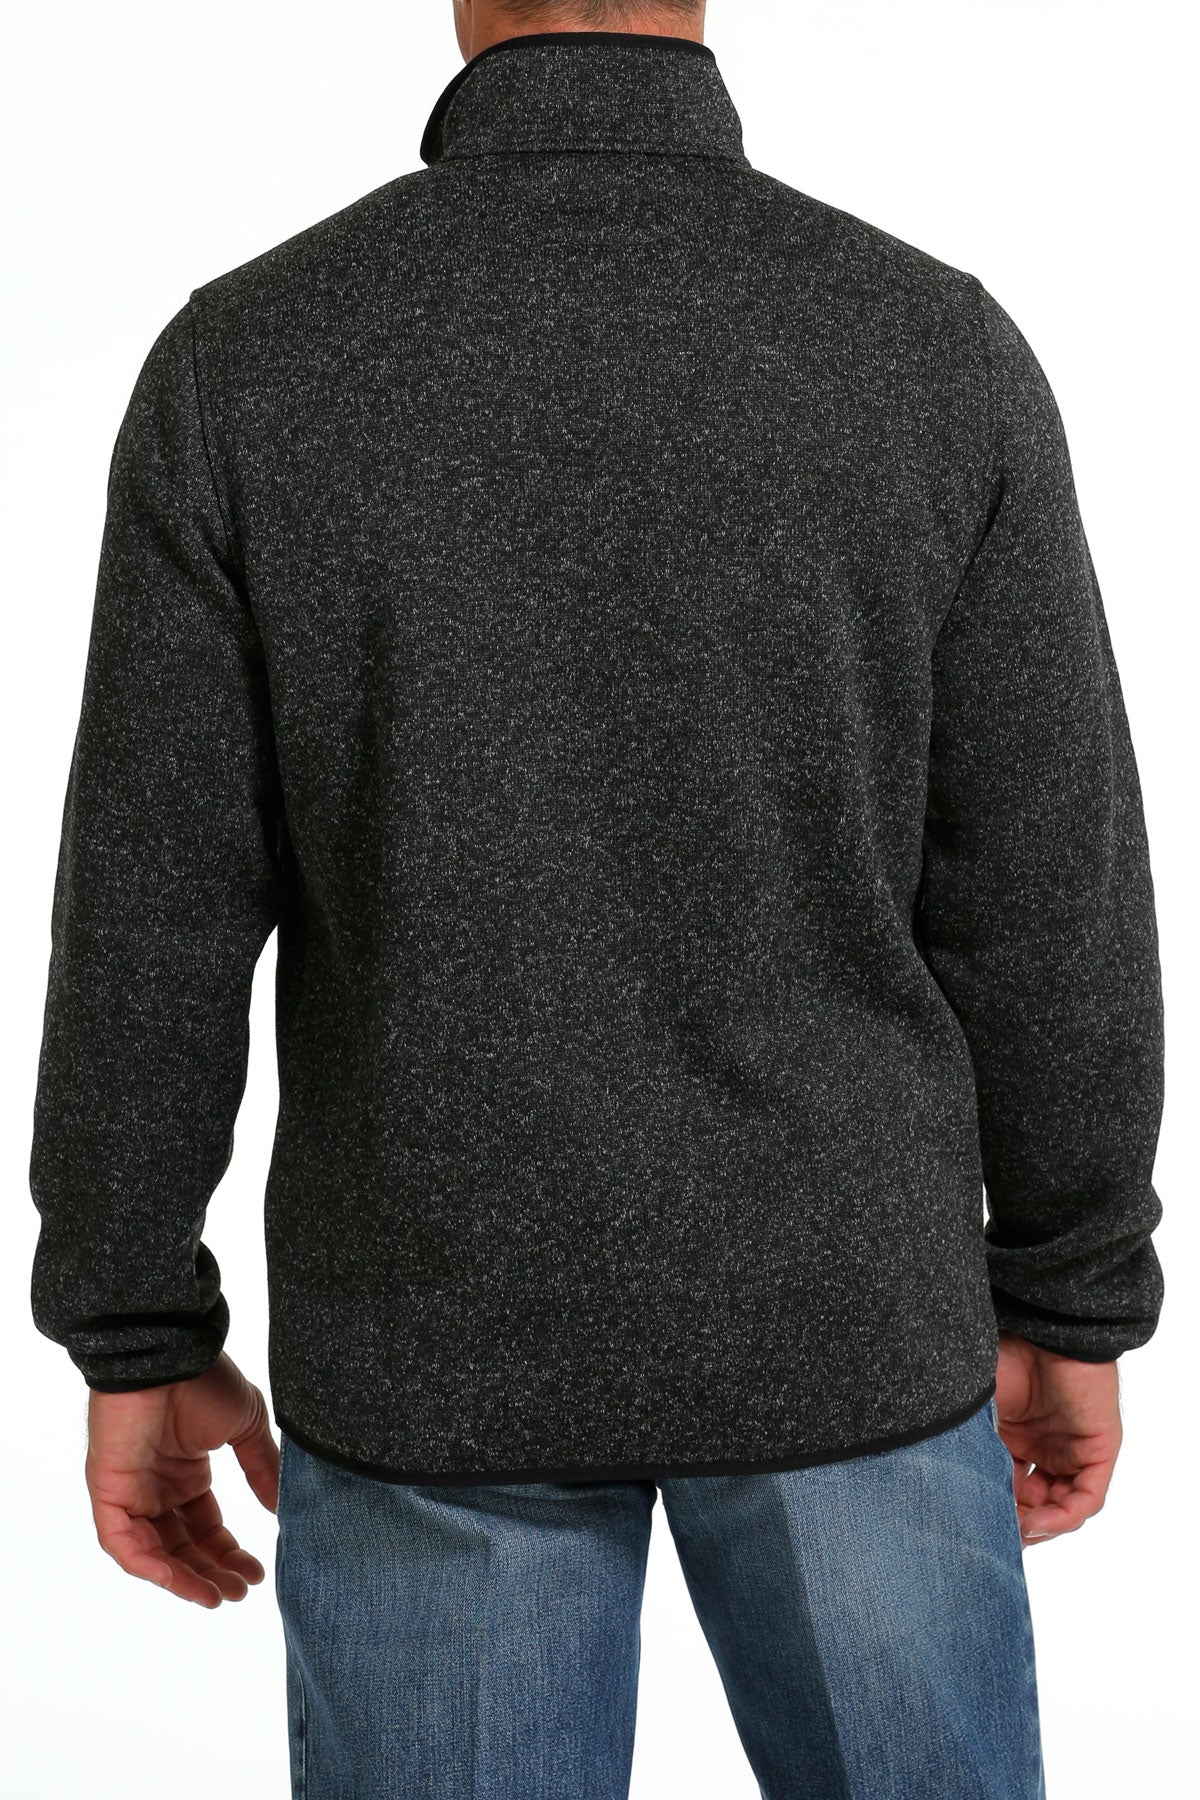 CINCH Men's Pullover Sweater